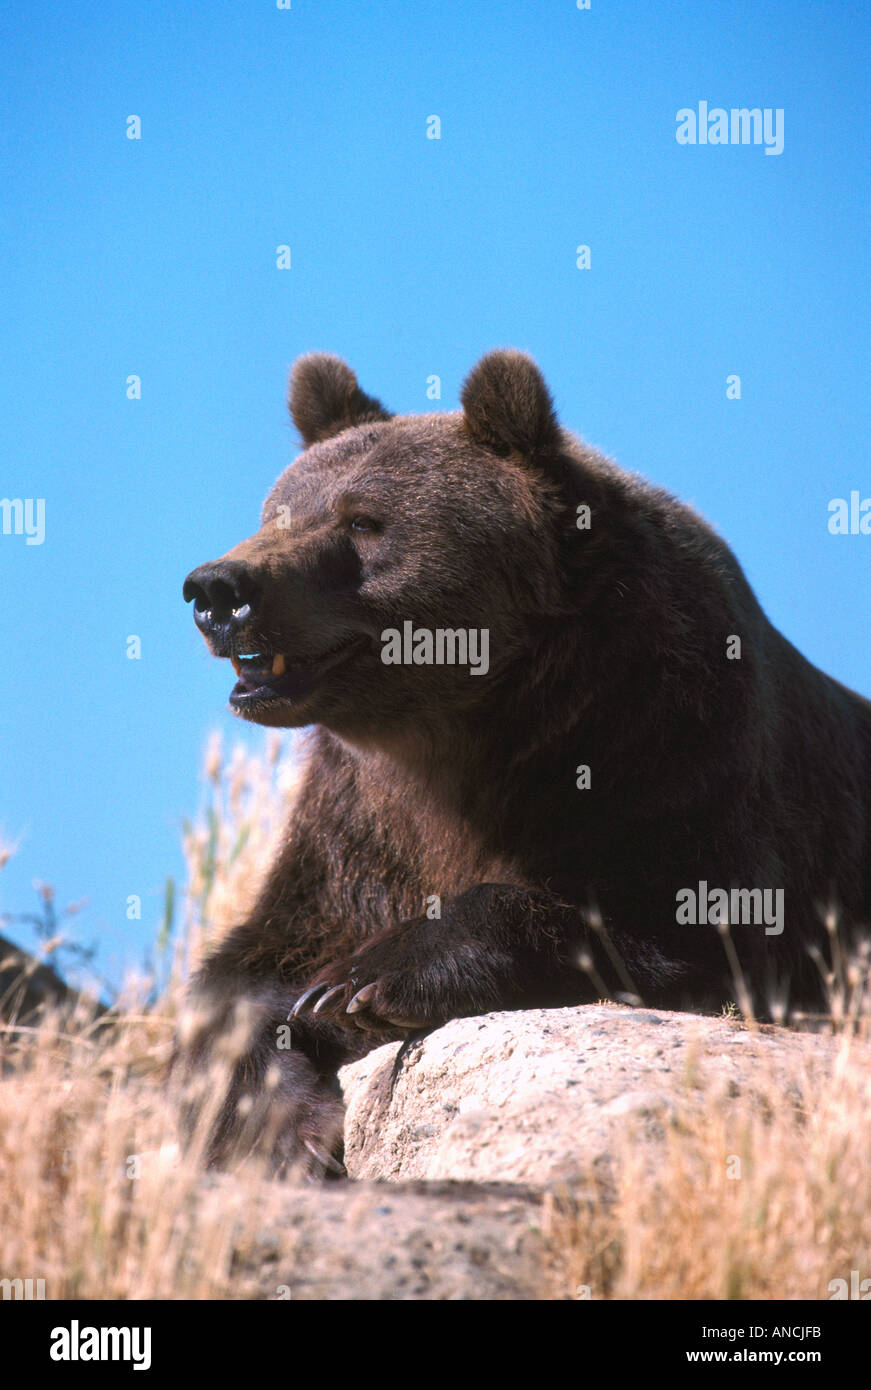 Kodiak Bear aka Alaskan Grizzly Bear and Alaska Brown Bear (Ursus arctos middendorffi) lying in Sun - North American Wild Animal Stock Photo